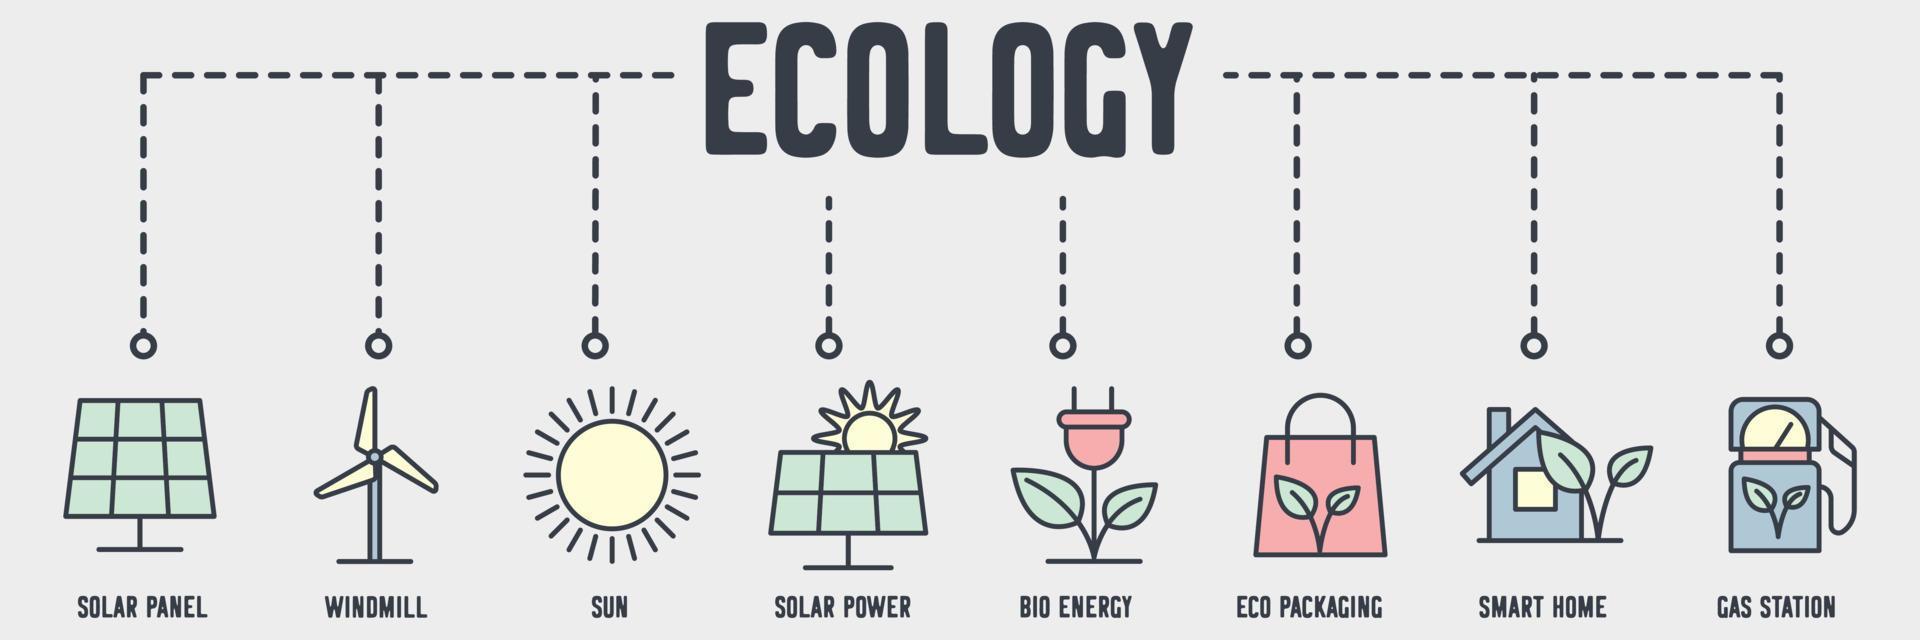 ekologi miljömässig hållbarhet banner webbikon. solpanel, väderkvarn, sol, solenergi, bioenergi, ekoförpackningar, smarta hem, bensinstation vektorillustration koncept. vektor